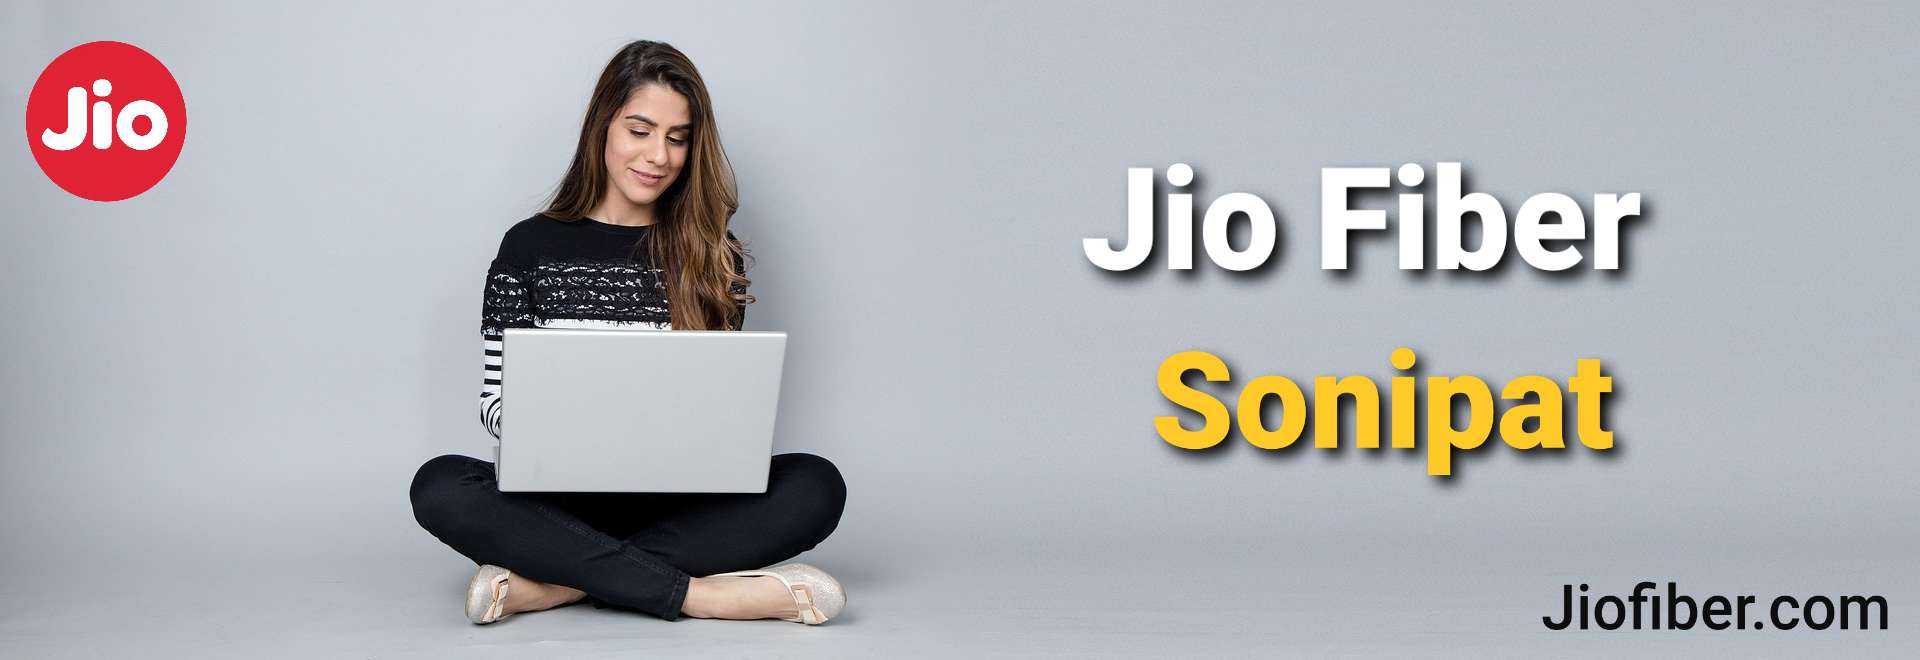 Jio Fiber Sonipat Customer Care, Plans, Registration, Offers